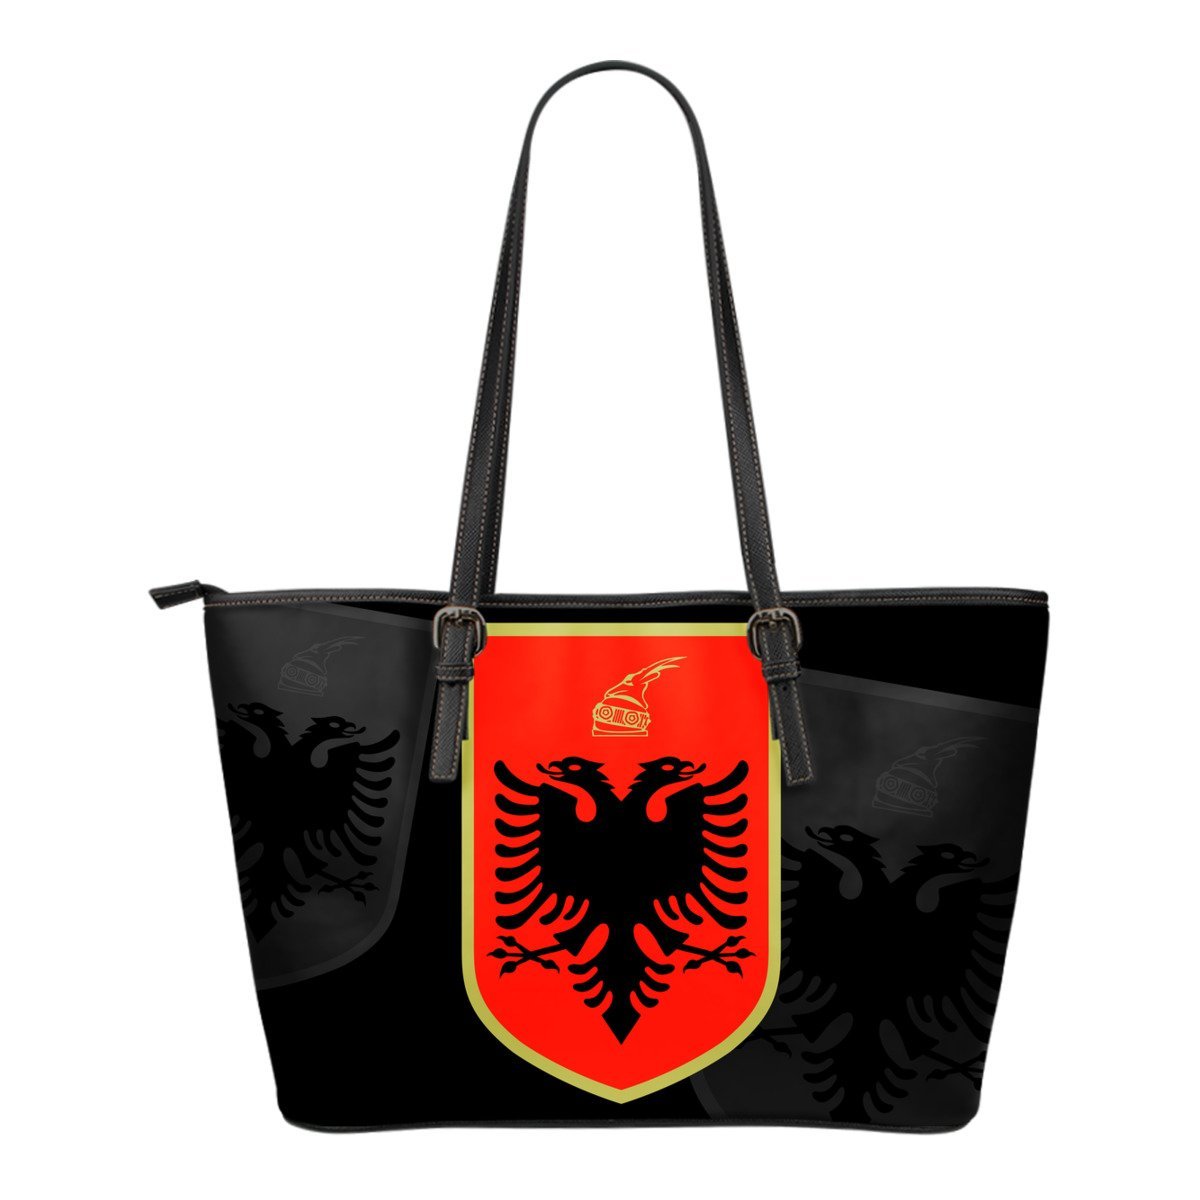 albania-leather-tote-bag-small-size